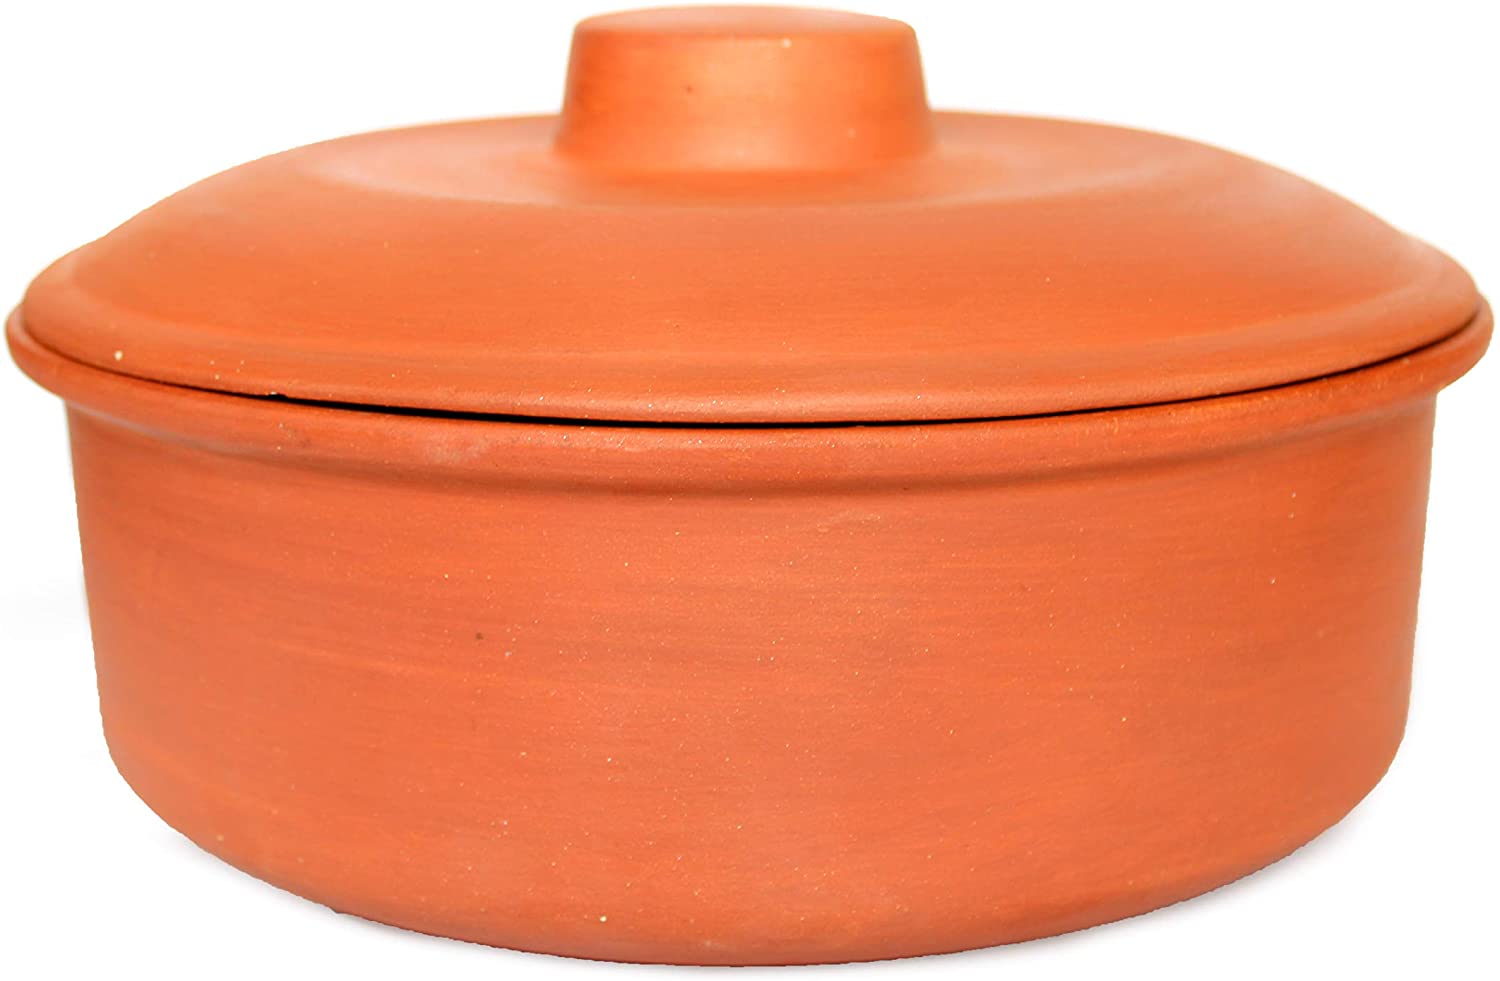 https://stonkraft.com/wp-content/uploads/2021/07/KLEO-Clay-Casserole-Chapati-10-INCH-Natural-Clay-Handmade-Cookware-Roti-Tawa-Earthenware-Pot-Terracotta-Pot-B08438LLSL-4.jpg